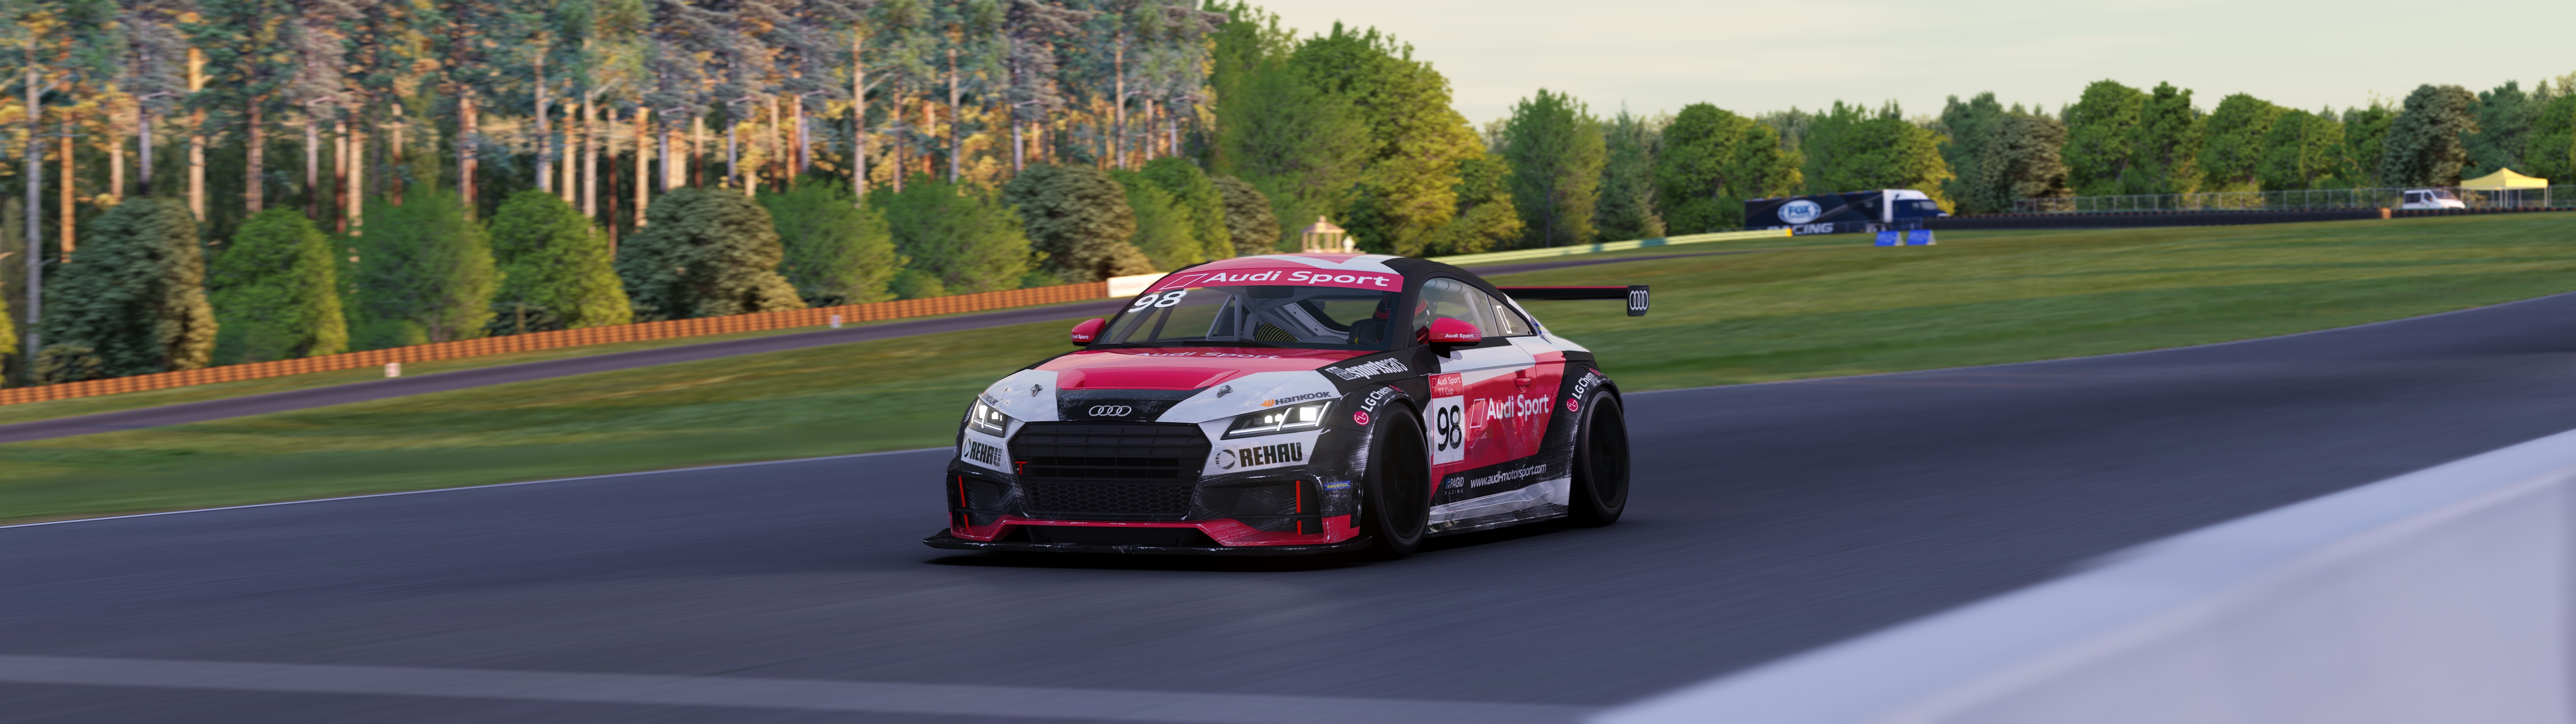 General 5120x1440 racing Assetto Corsa motorsport racing simulators car livery video games Audi TT